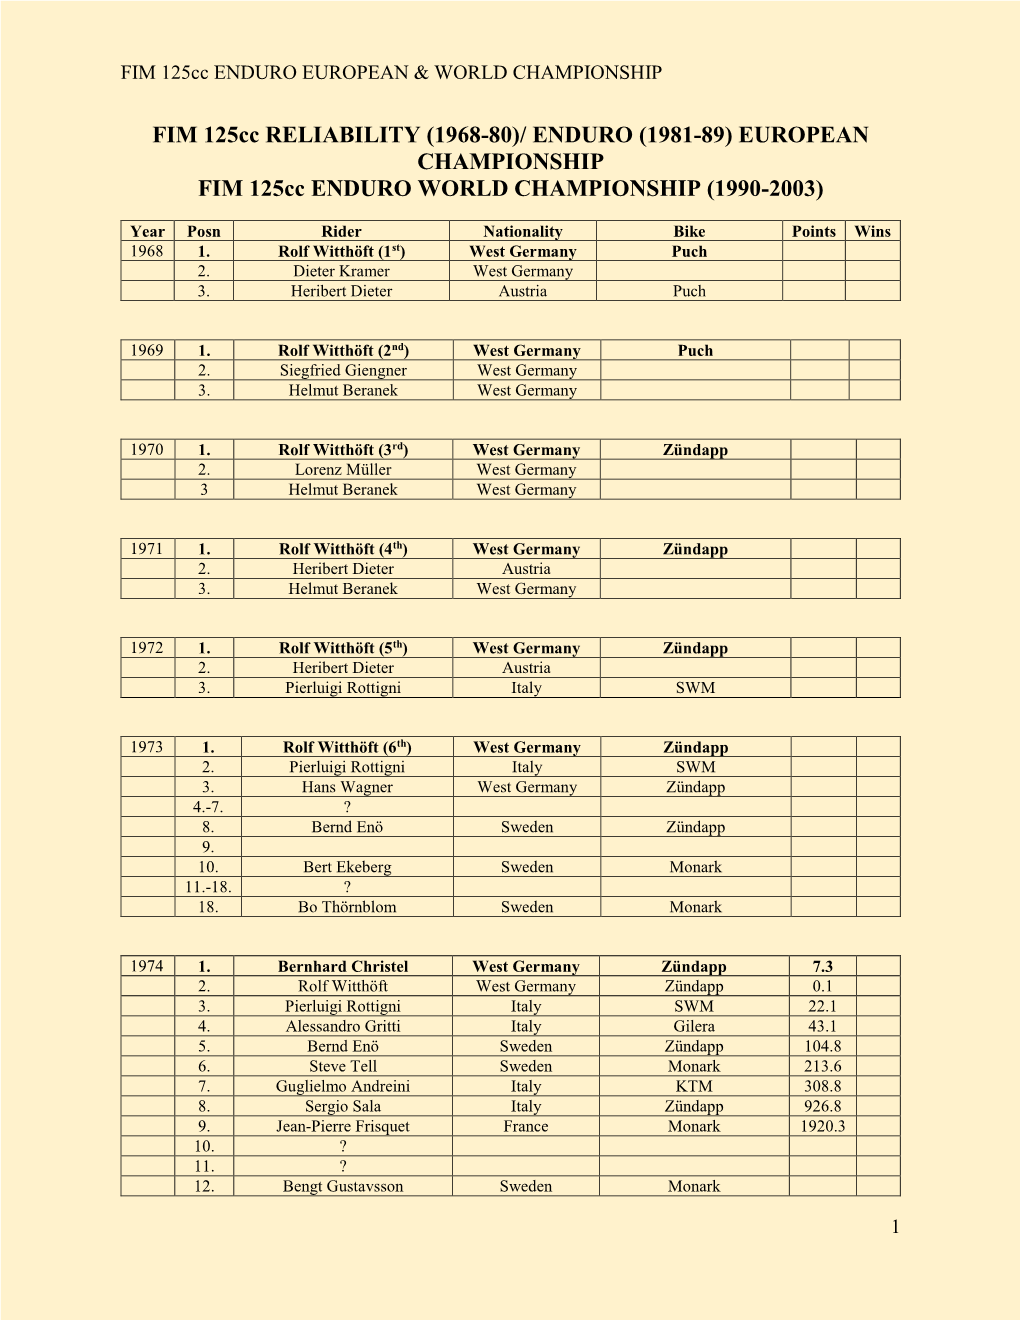 EUROPEAN CHAMPIONSHIP FIM 125Cc ENDURO WORLD CHAMPIONSHIP (1990-2003)